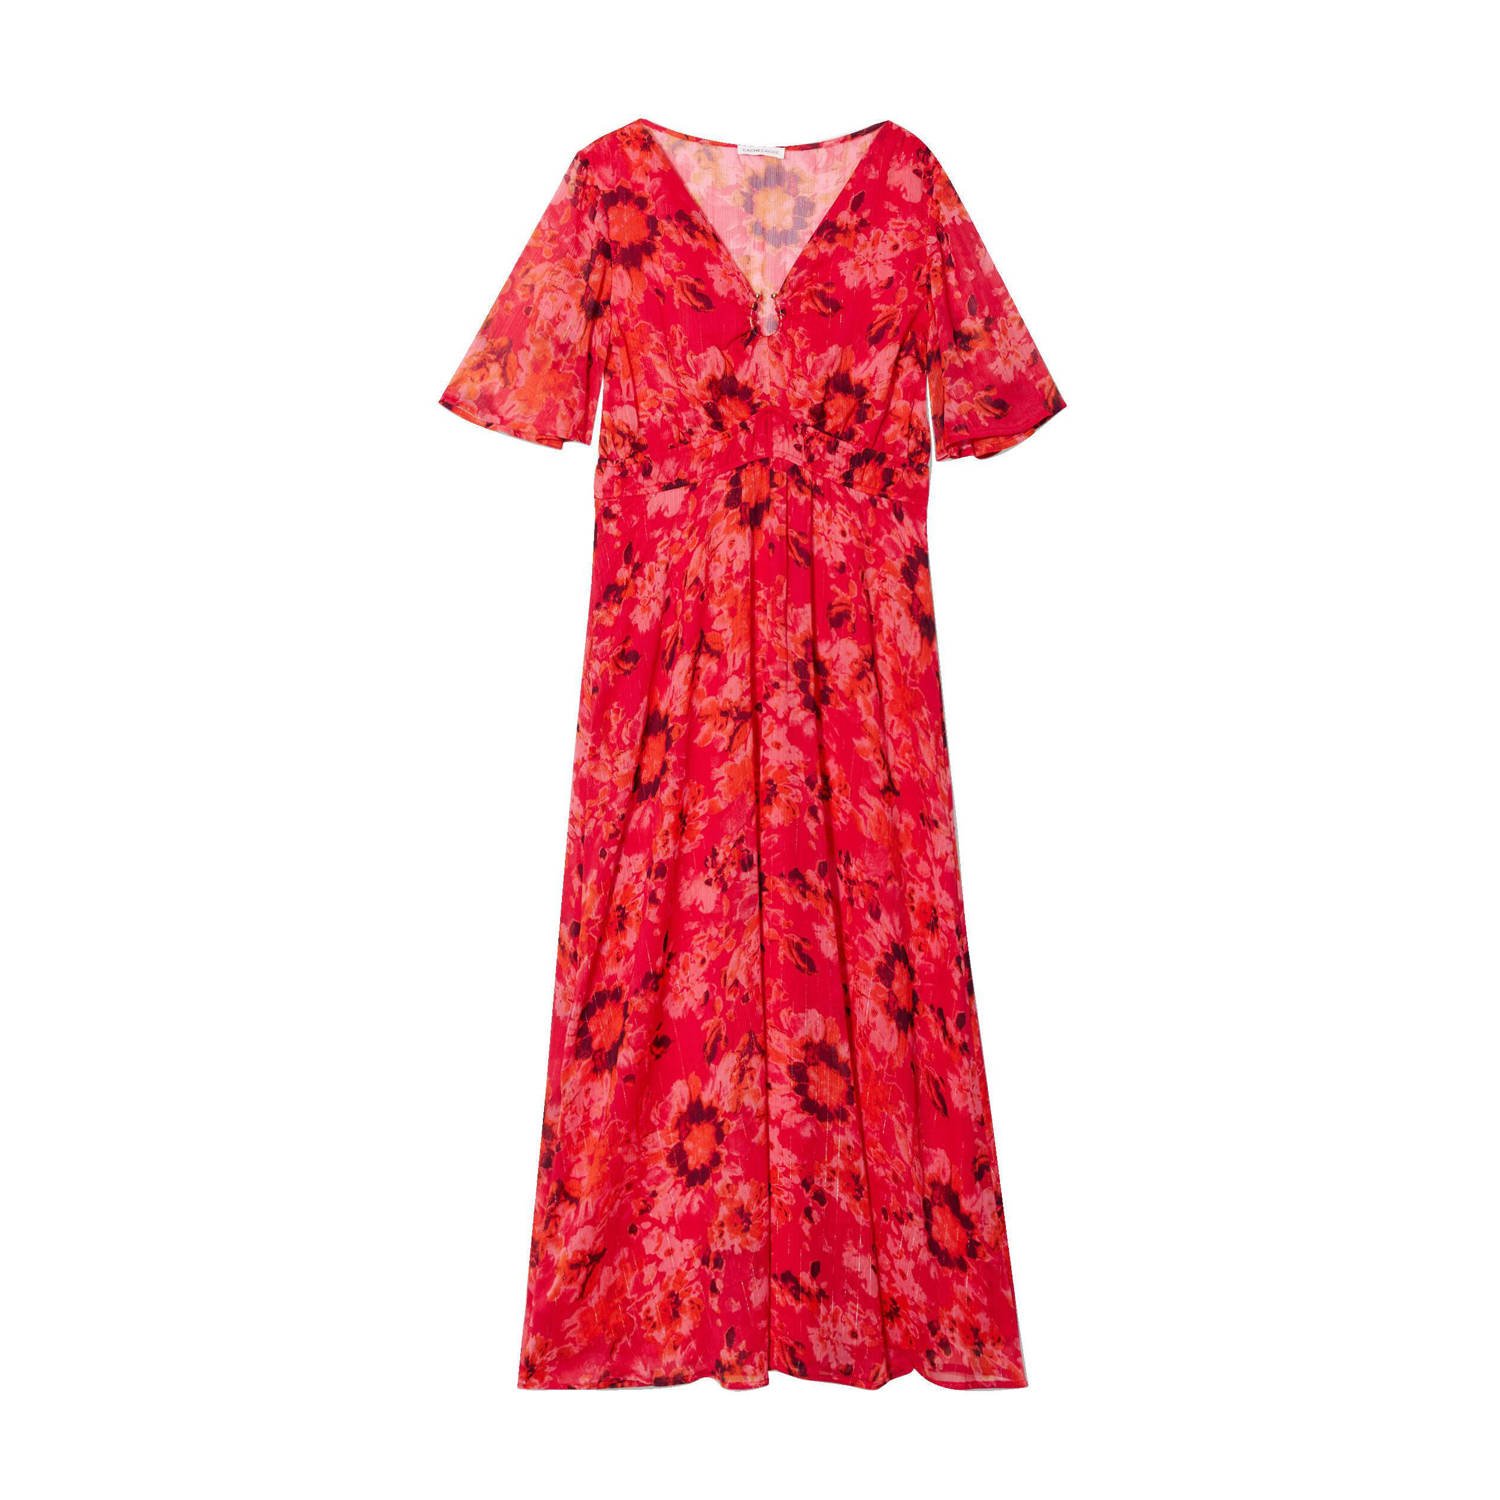 Cache semi-transparante jurk met all over print rood multi